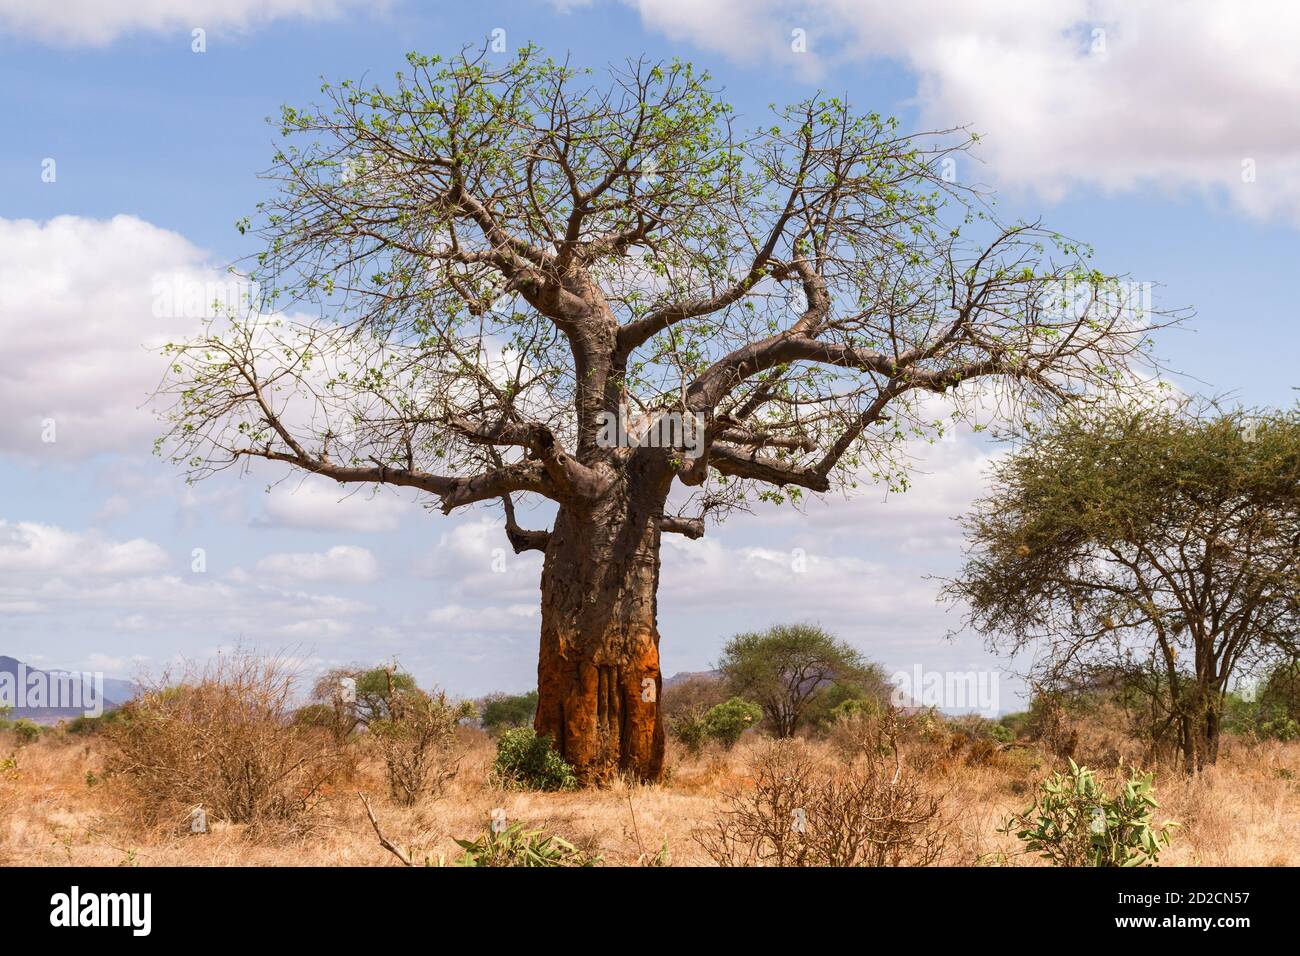 A large African baobab tree (Adansonia digitata) in open savannah on a sunny morning, Kenya, East Africa Stock Photo